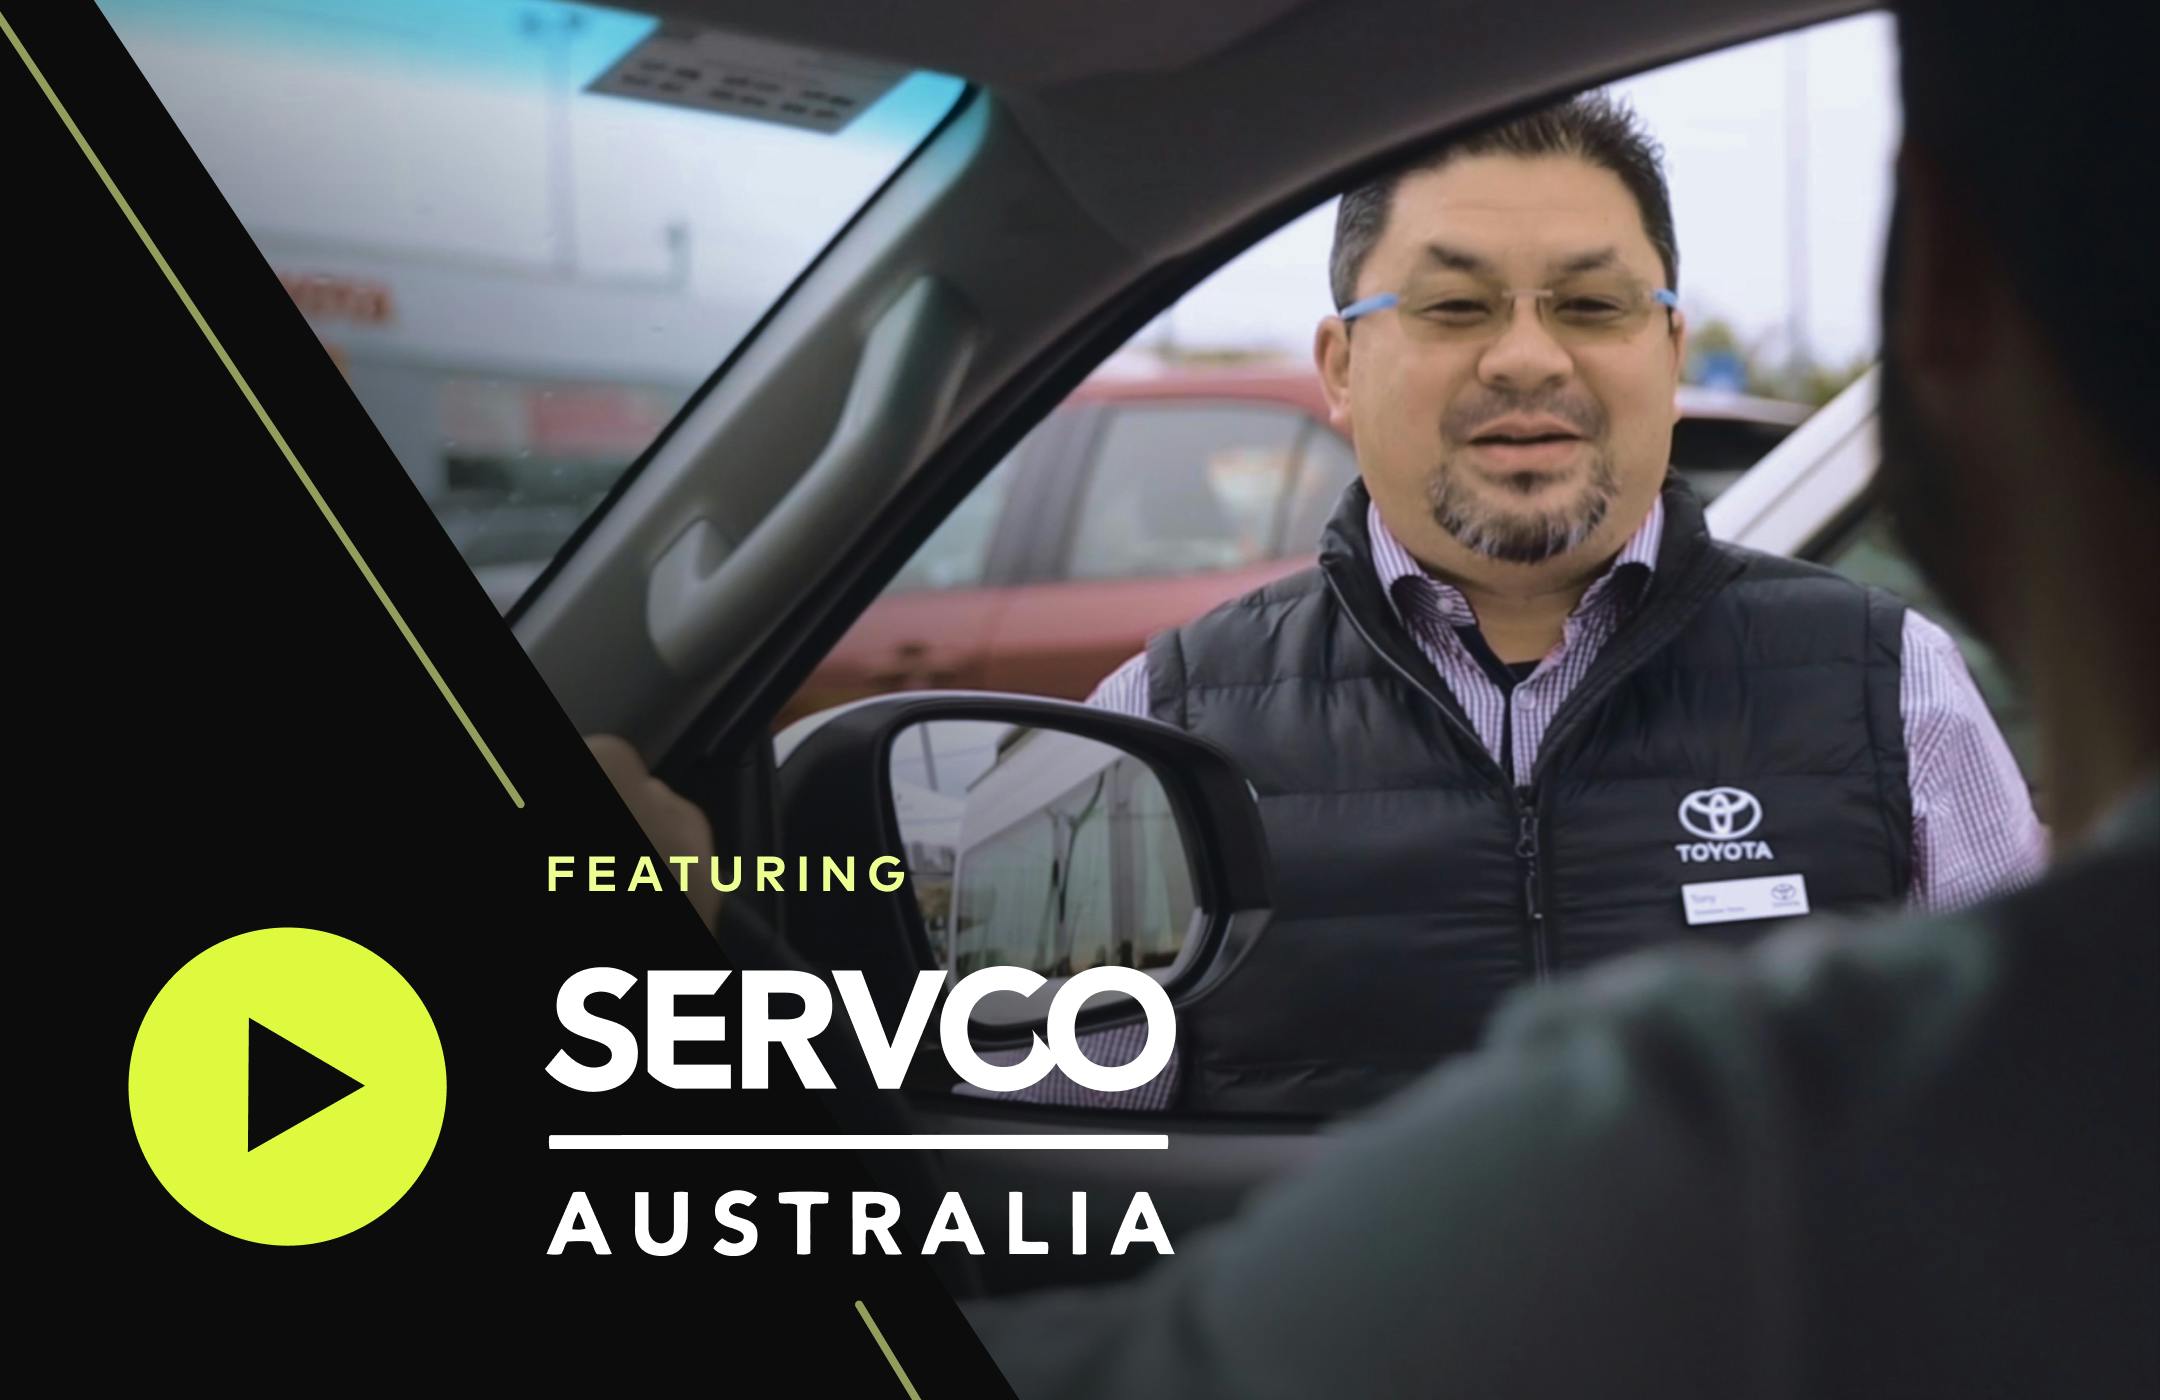 Featuring Servco Australia